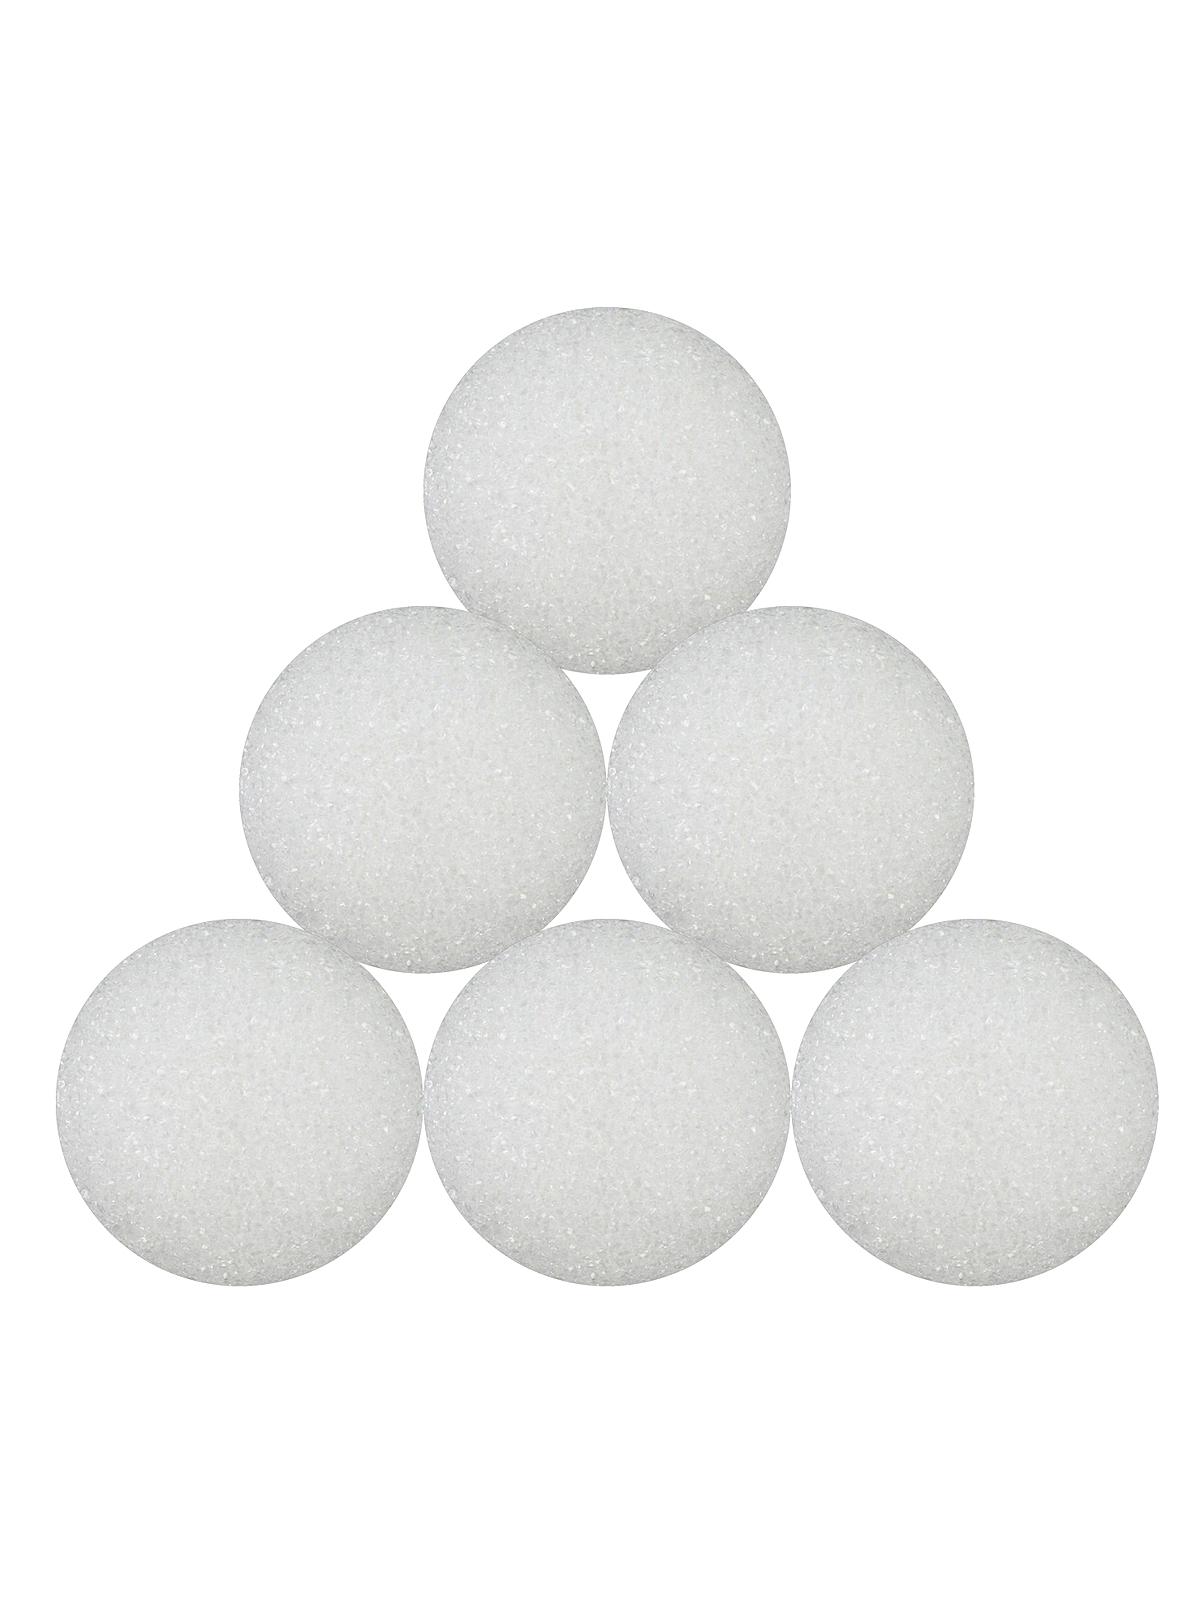 Styrofoam Snowballs 2 In. Pack Of 12